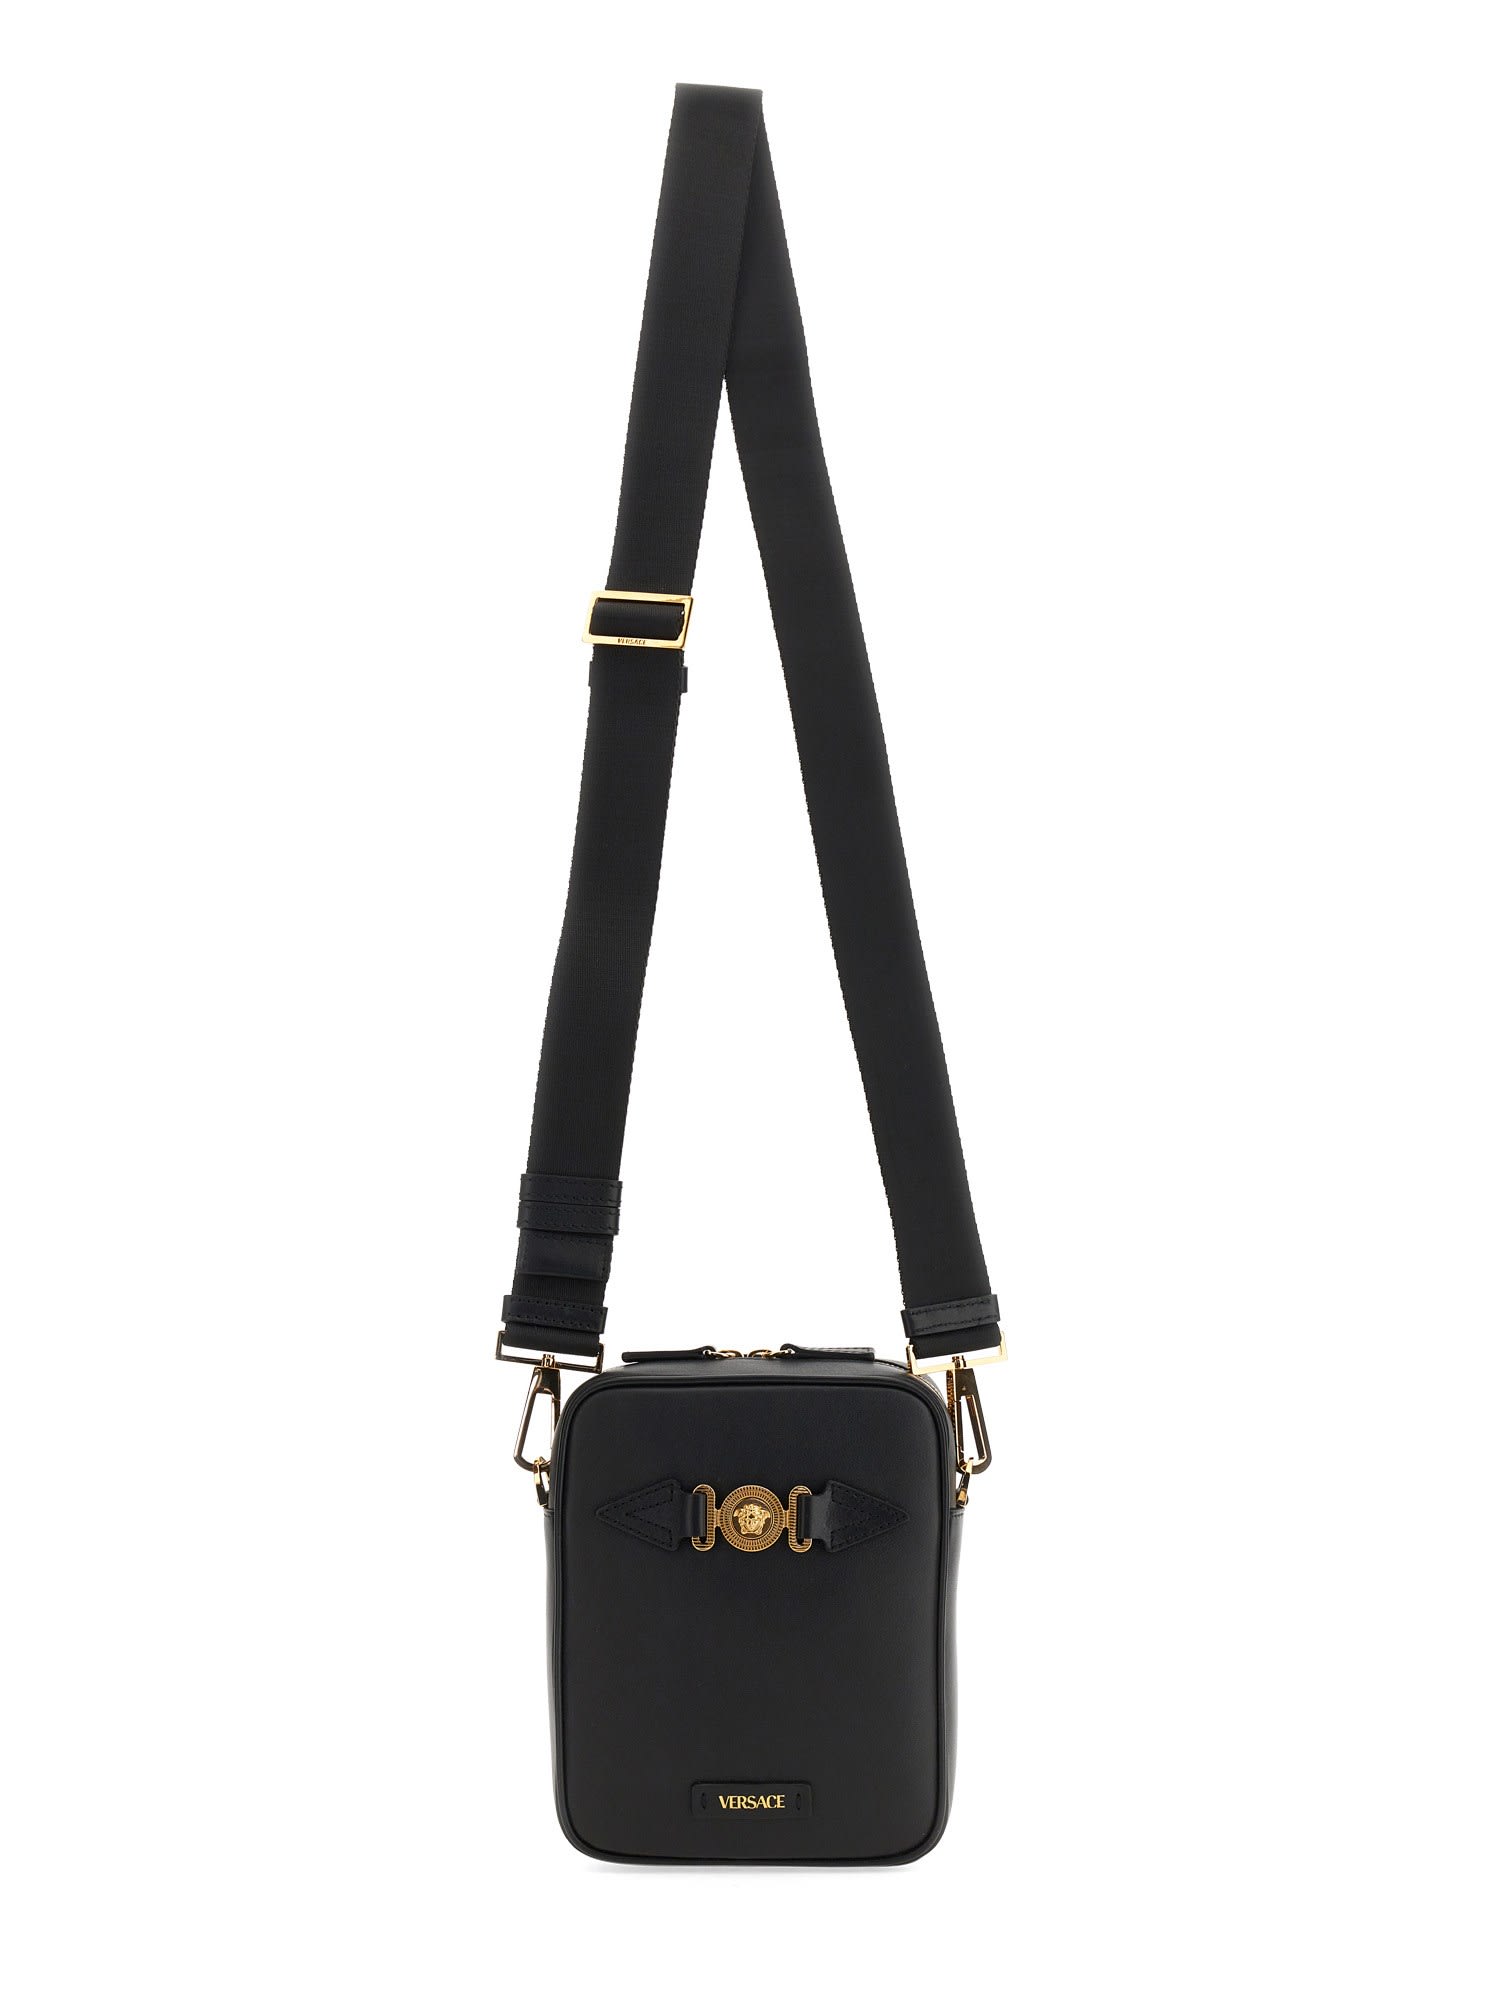 Black La Medusa mini leather cross-body bag, Versace